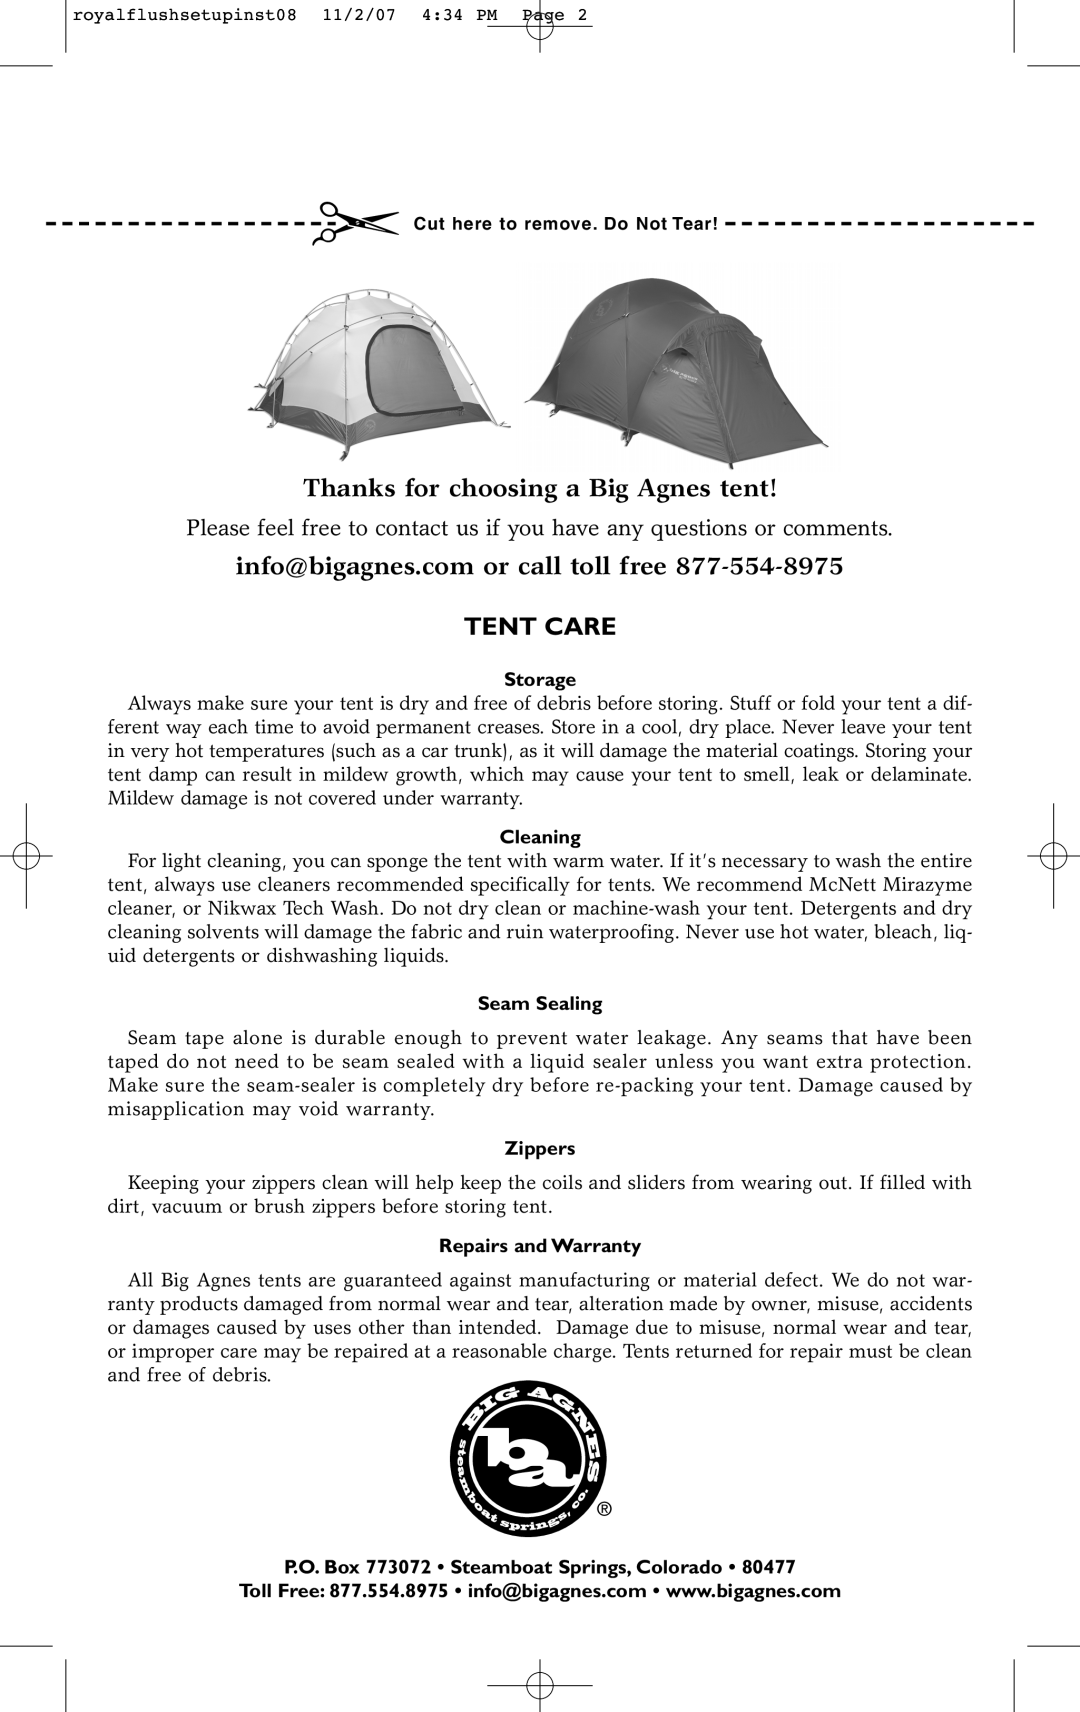 Big Agnes Royal Flush 3 Tent Care, Thanks for choosing a Big Agnes tent, info@bigagnes.com or call toll free, Storage 